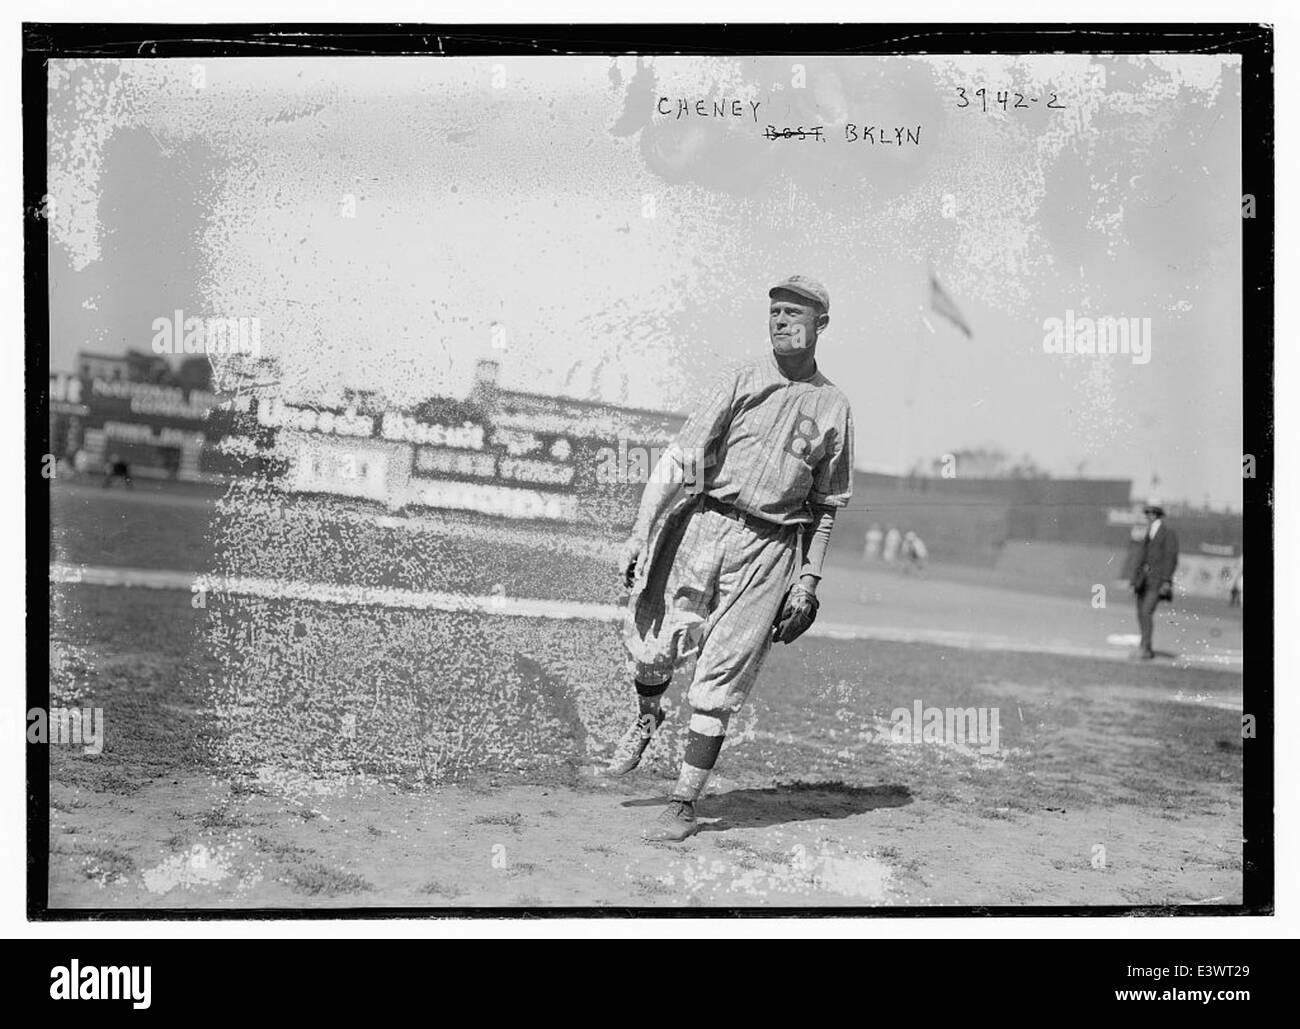 [Larry Cheney, Brooklyn NL (baseball)] (LOC) Stock Photo